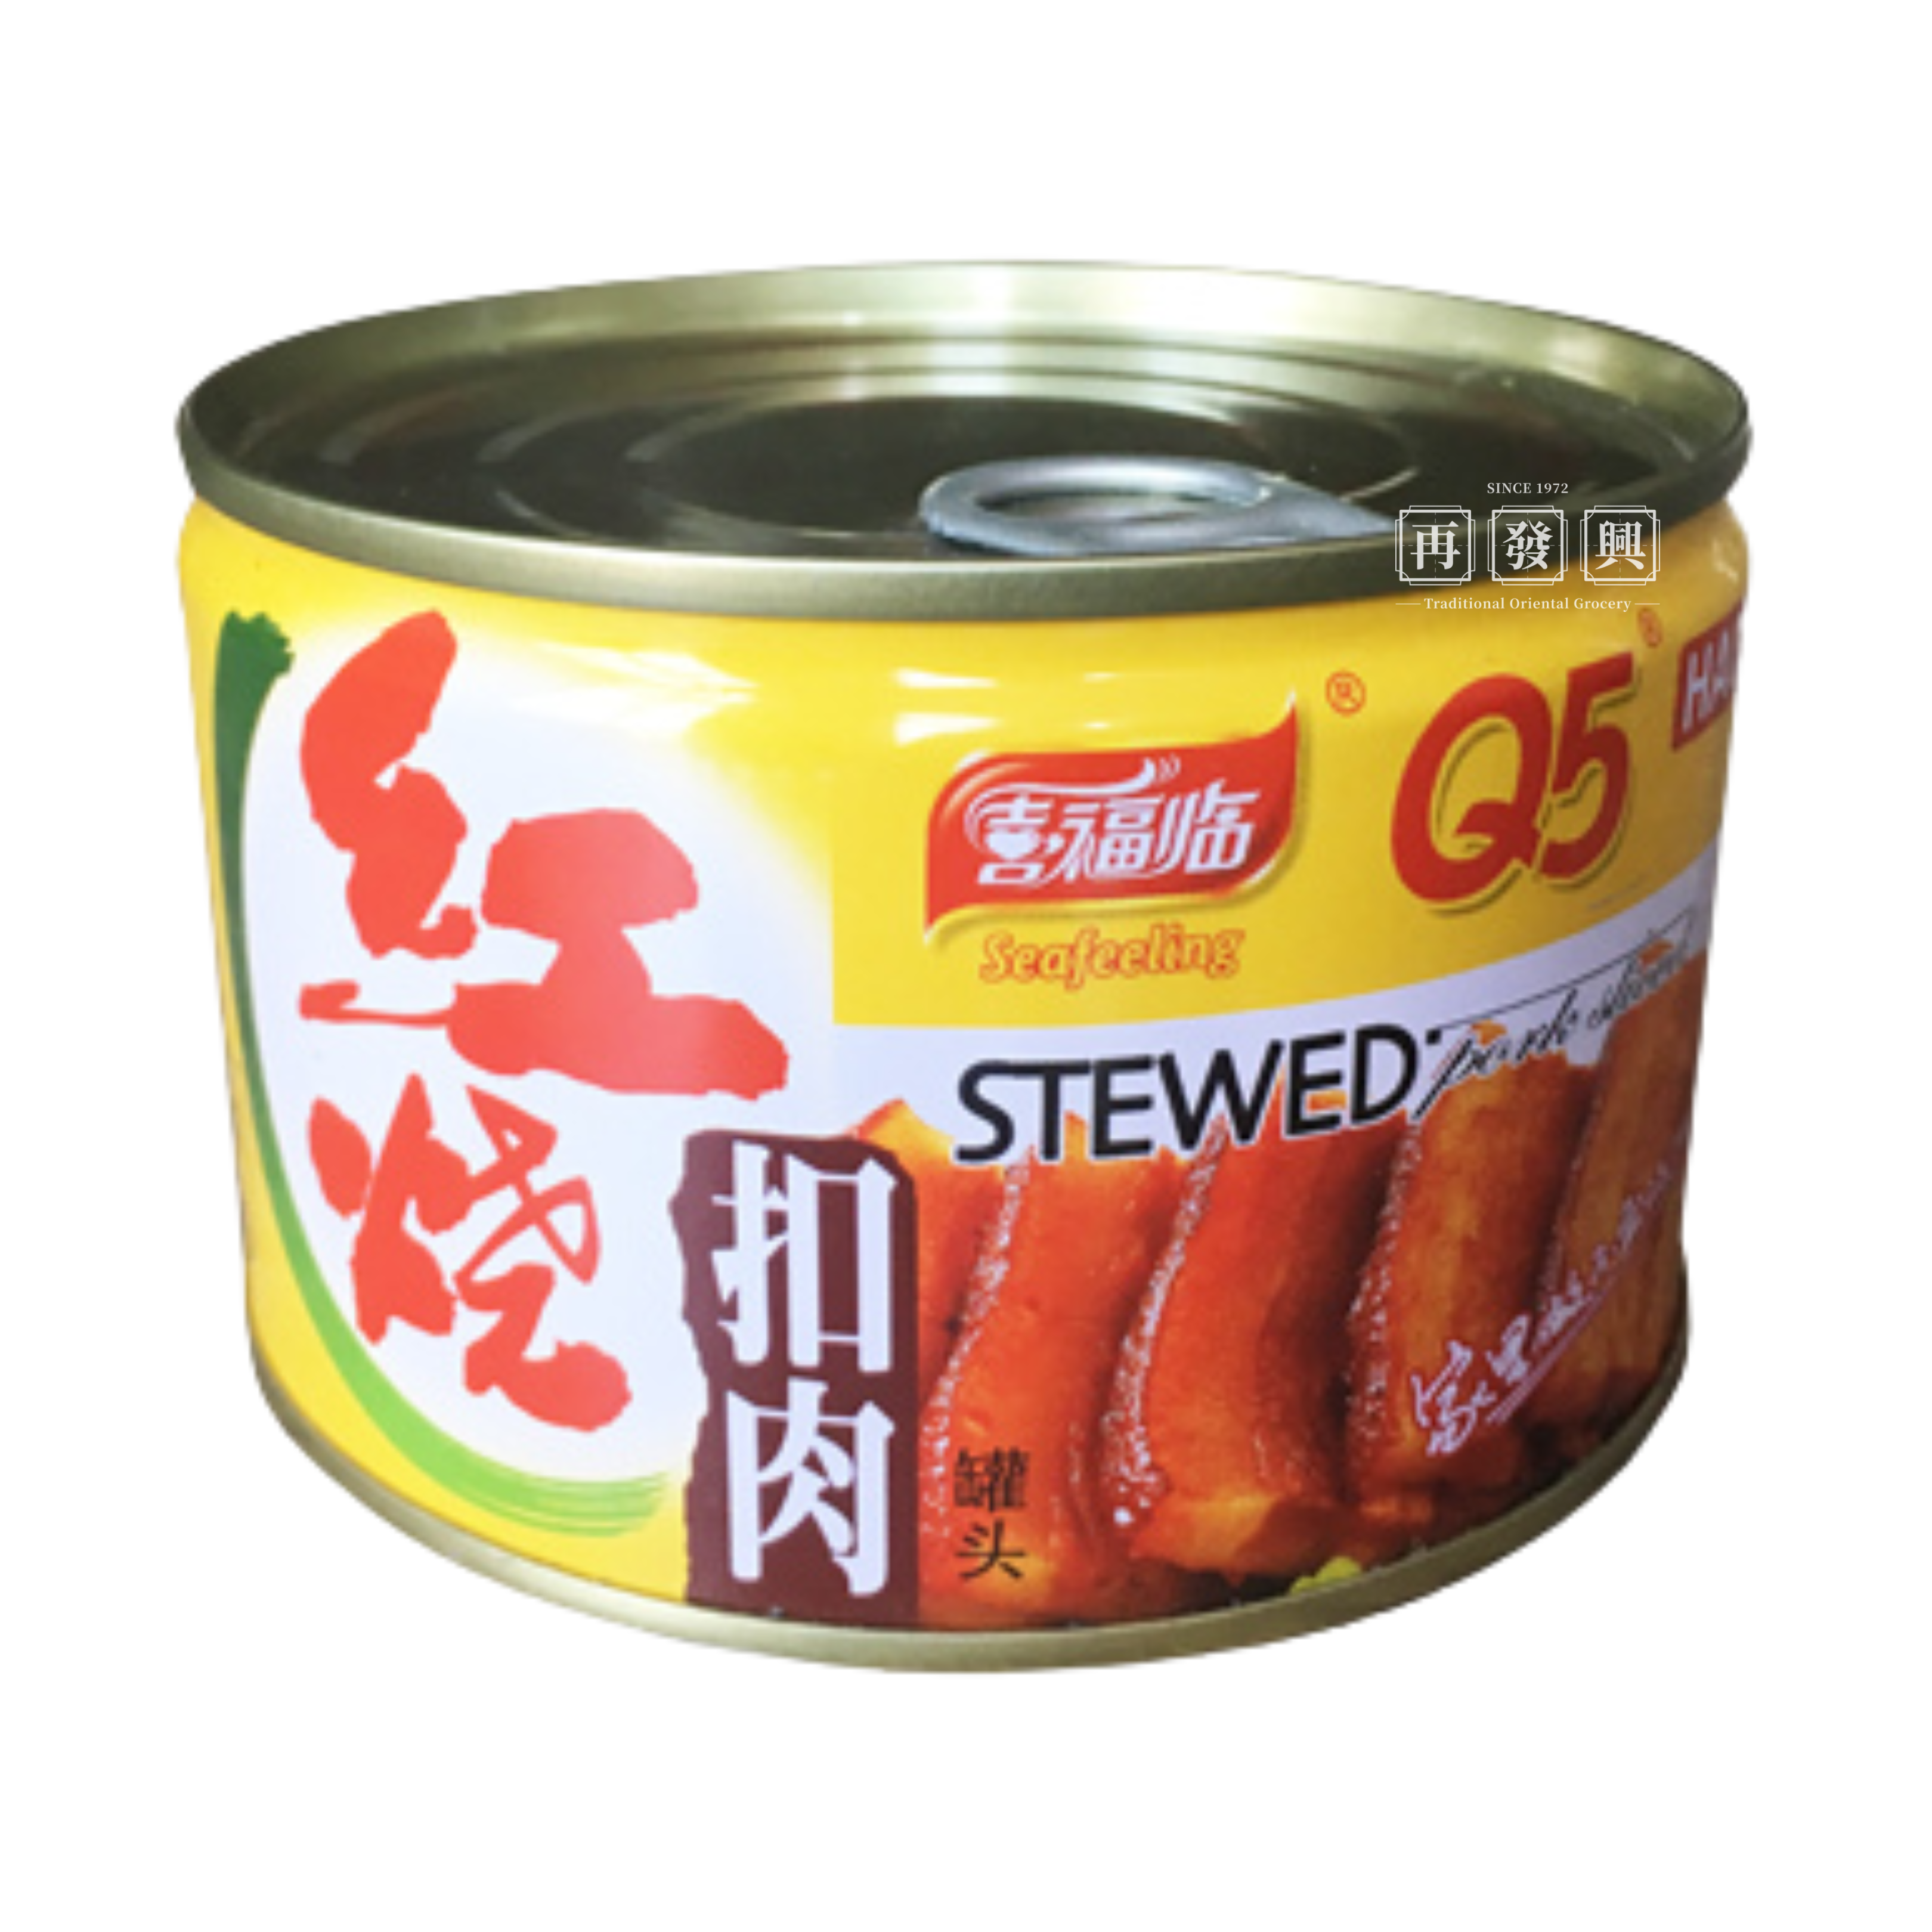 Q5 SeaFeeling Stewed Pork Slices 喜福临红烧扣肉 397g